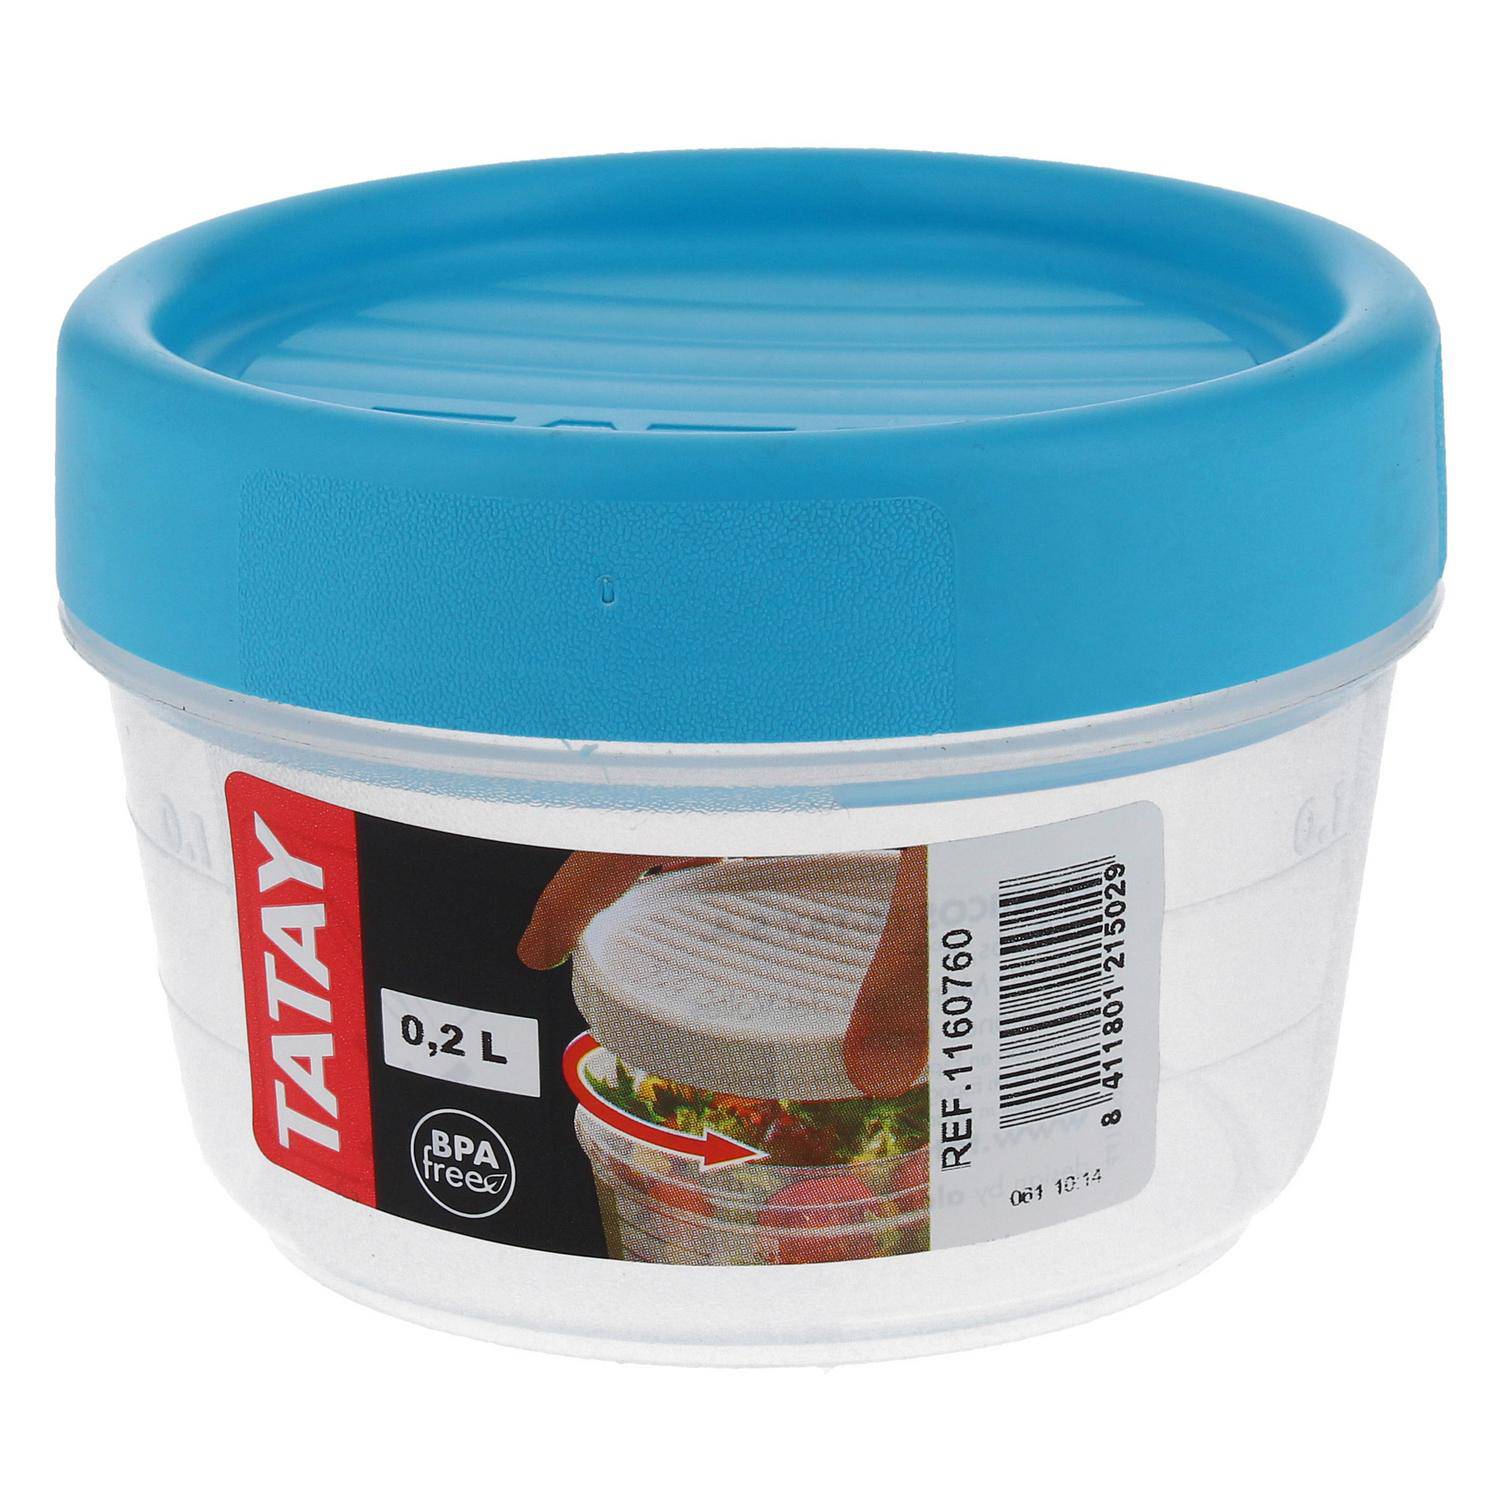 Comprar Taper Cuadrado 0,3L Tatay Online